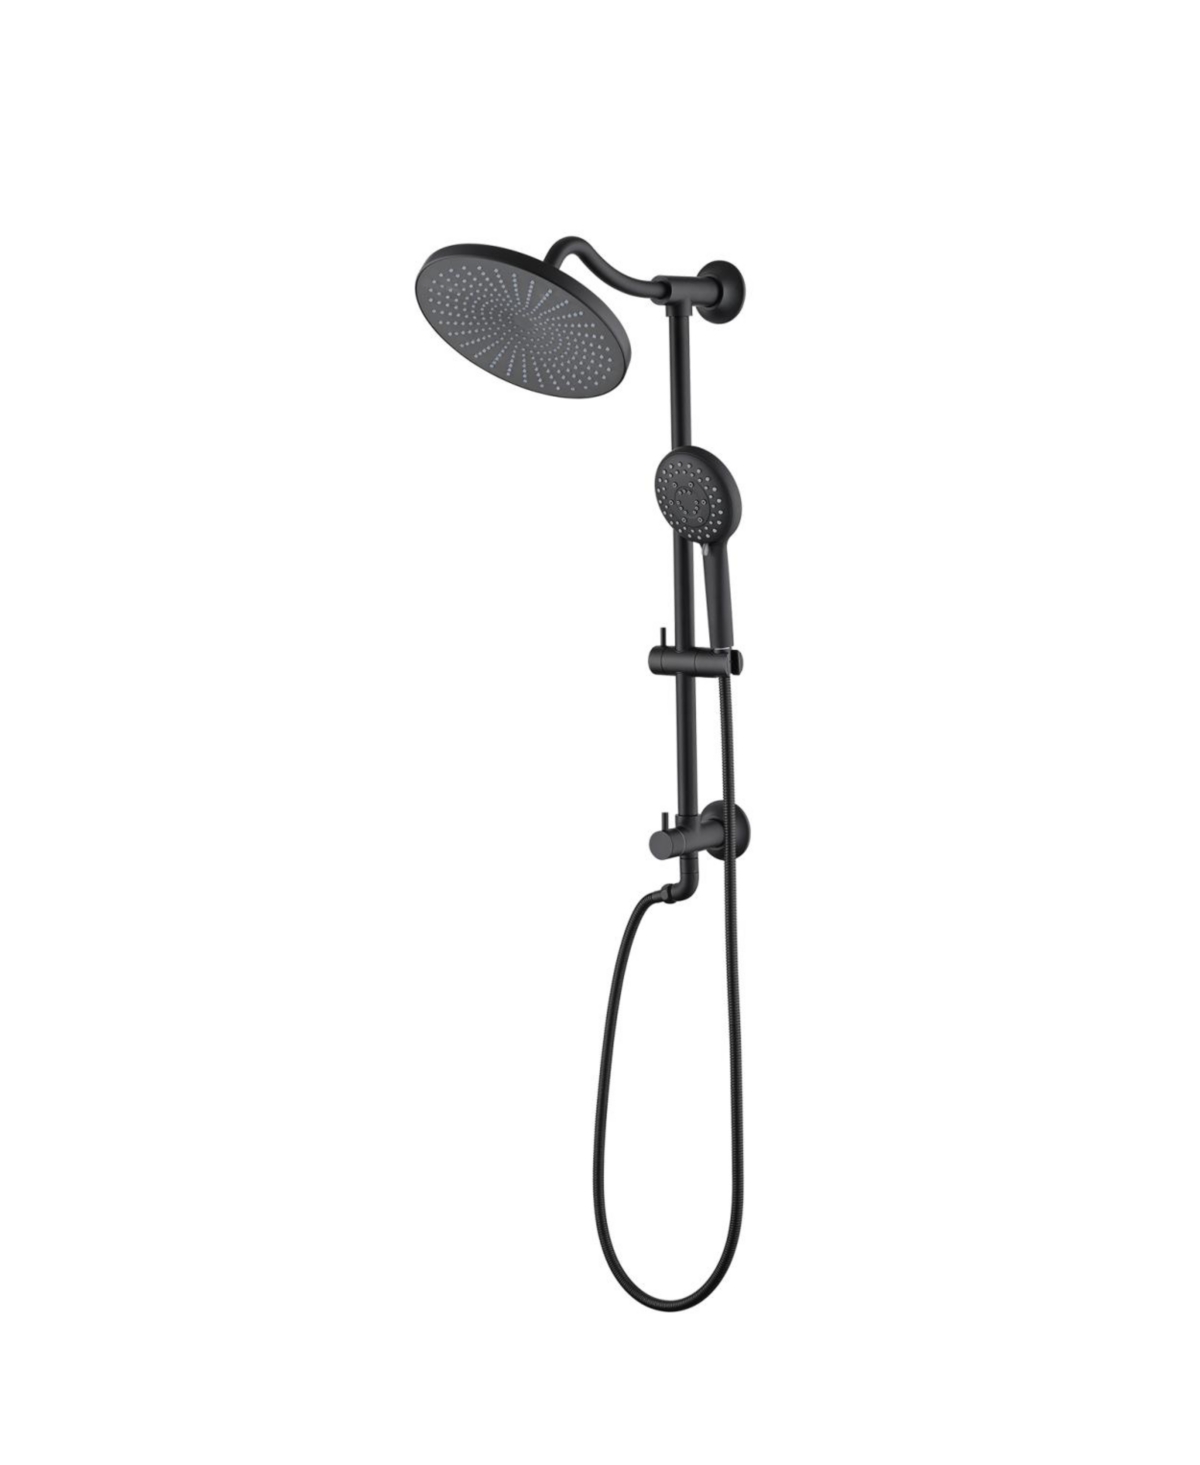 5-Setting Handheld Shower System Slide Bar Combo Rain Showerhead, Dual Shower Head Spa System - Black